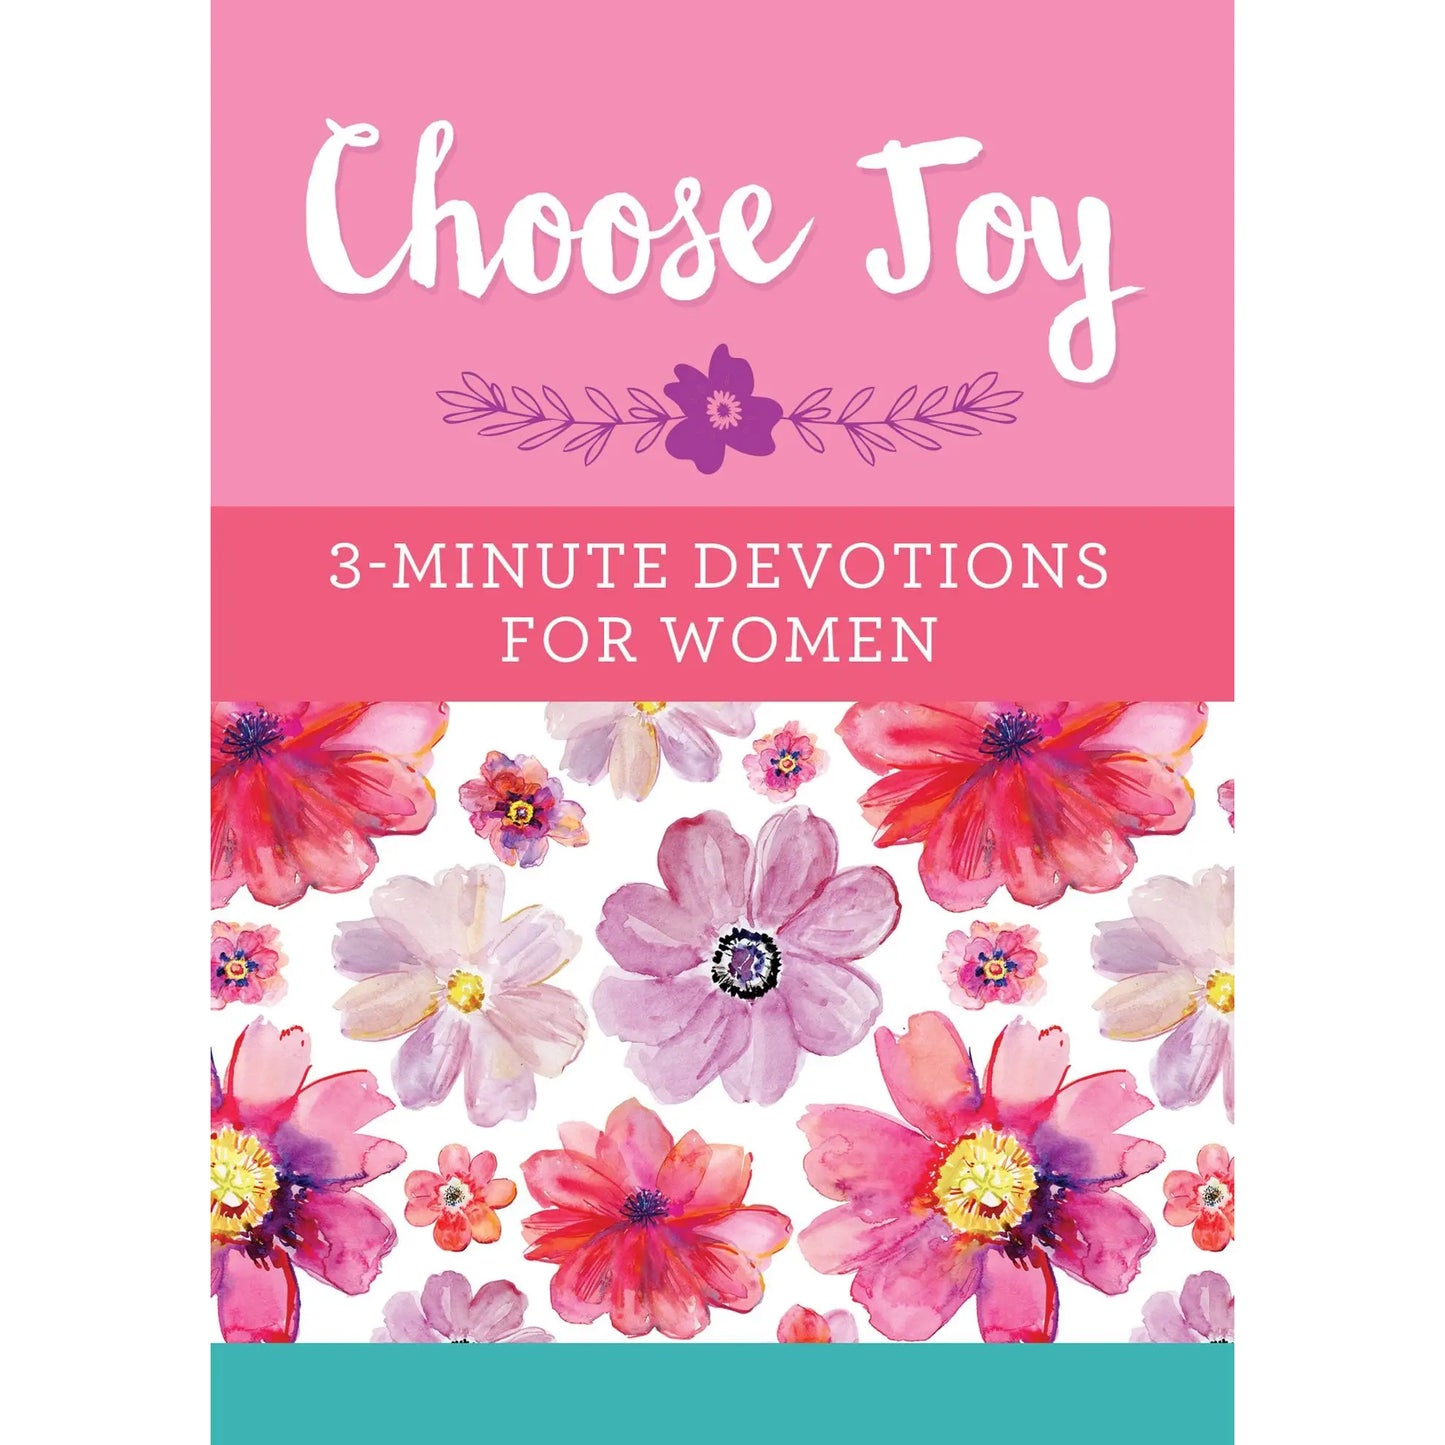 Choose joy 3-minutes